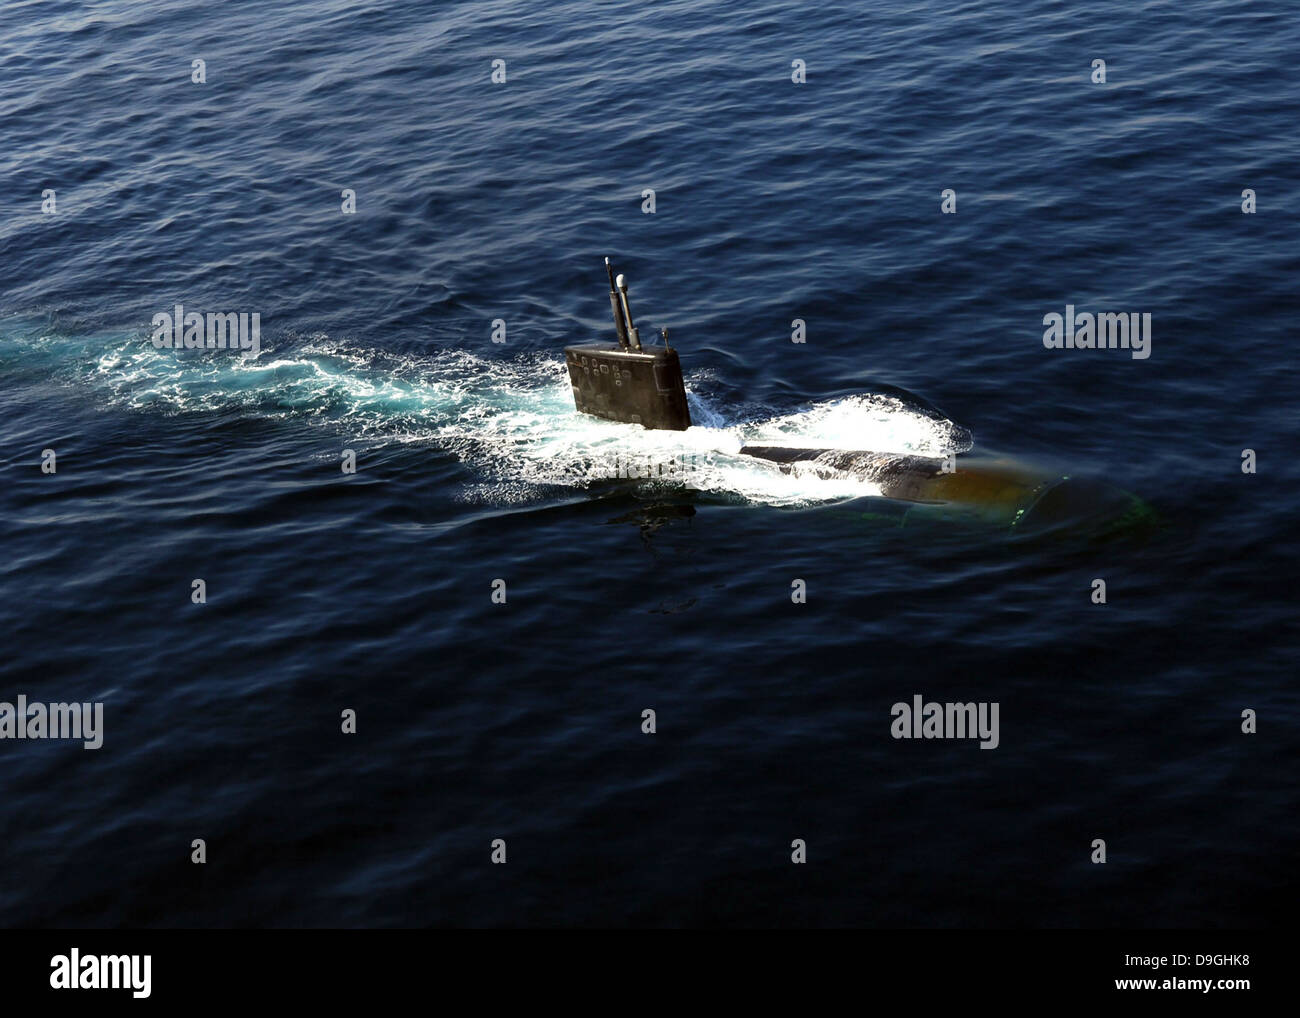 Los Angeles-class attack submarine USS Miami. Stock Photo